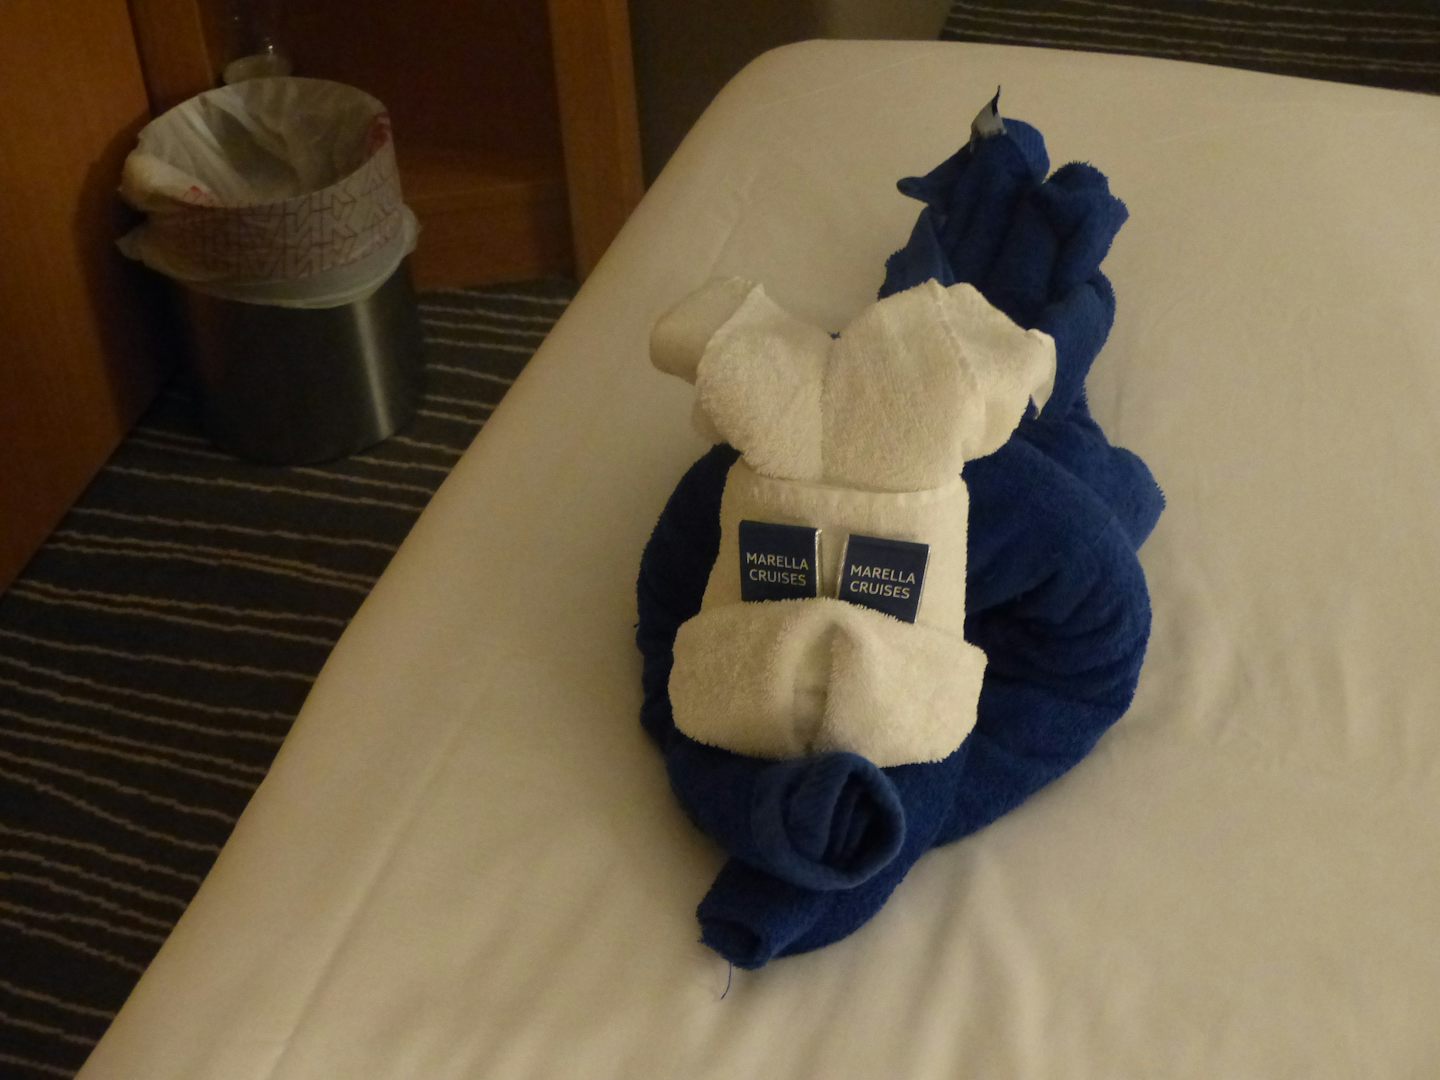 The obligatory towel animal to enlighten your evening!